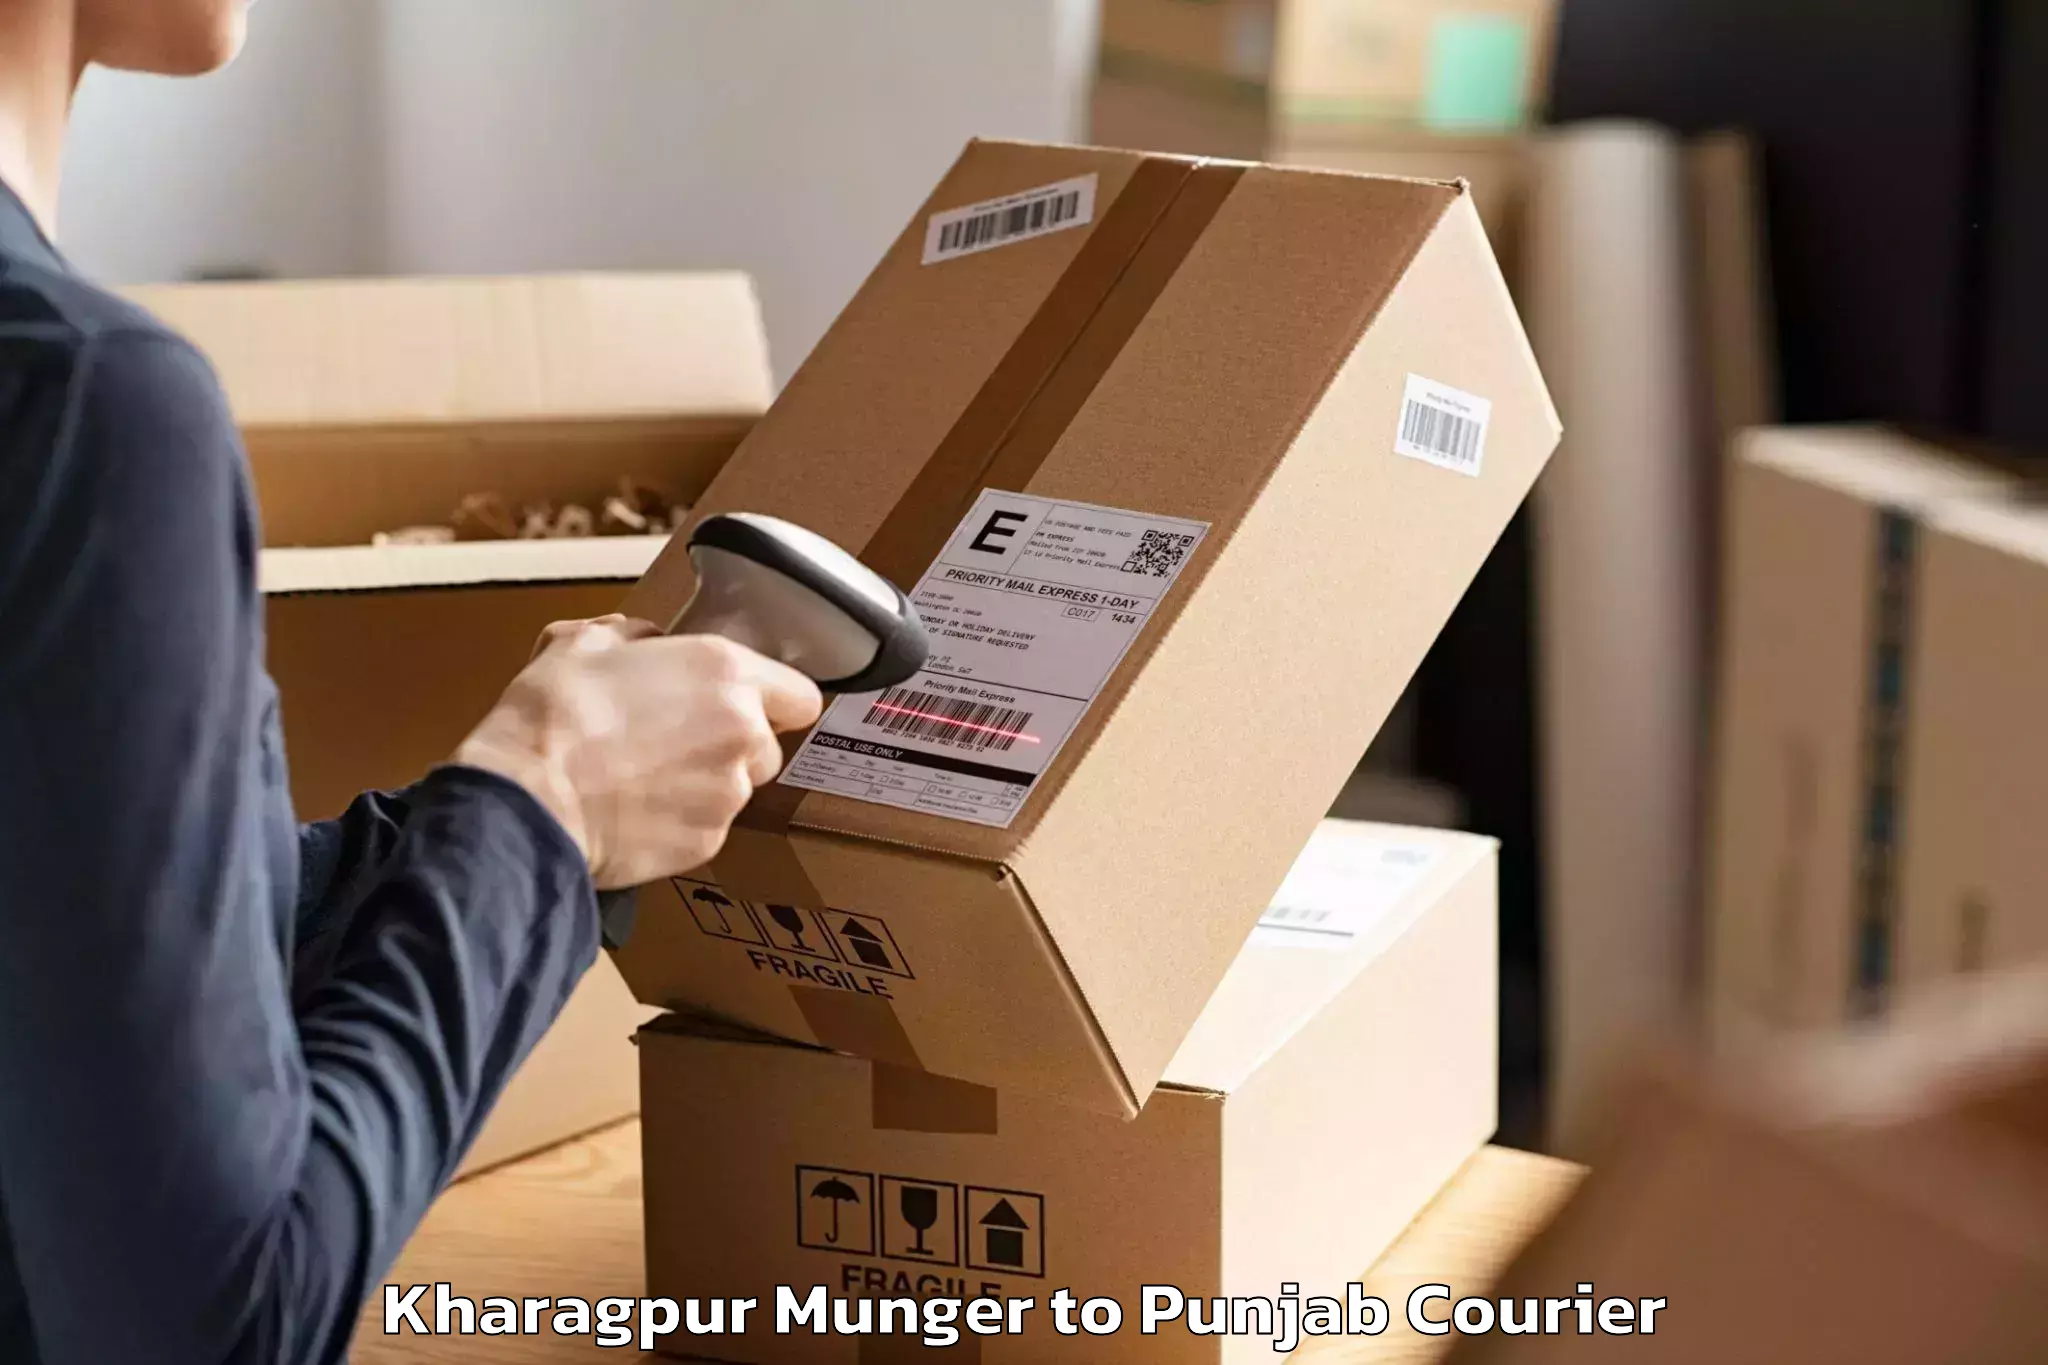 Moving and packing experts Kharagpur Munger to Malerkotla